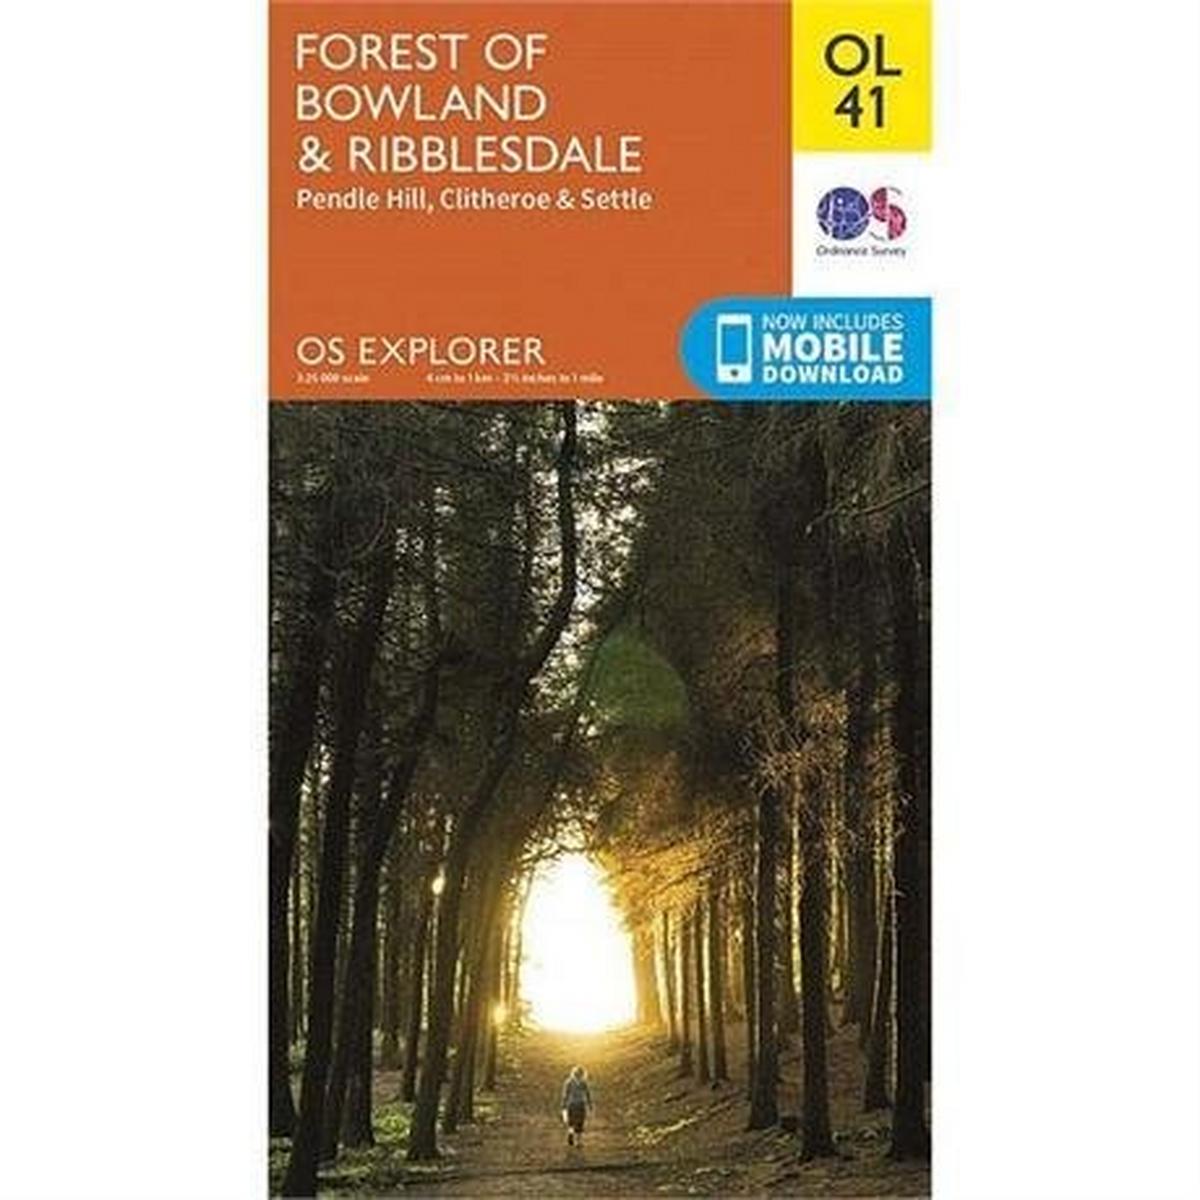 Ordnance Survey OS Explorer Map OL41 Forest of Bowland & Ribblesdale